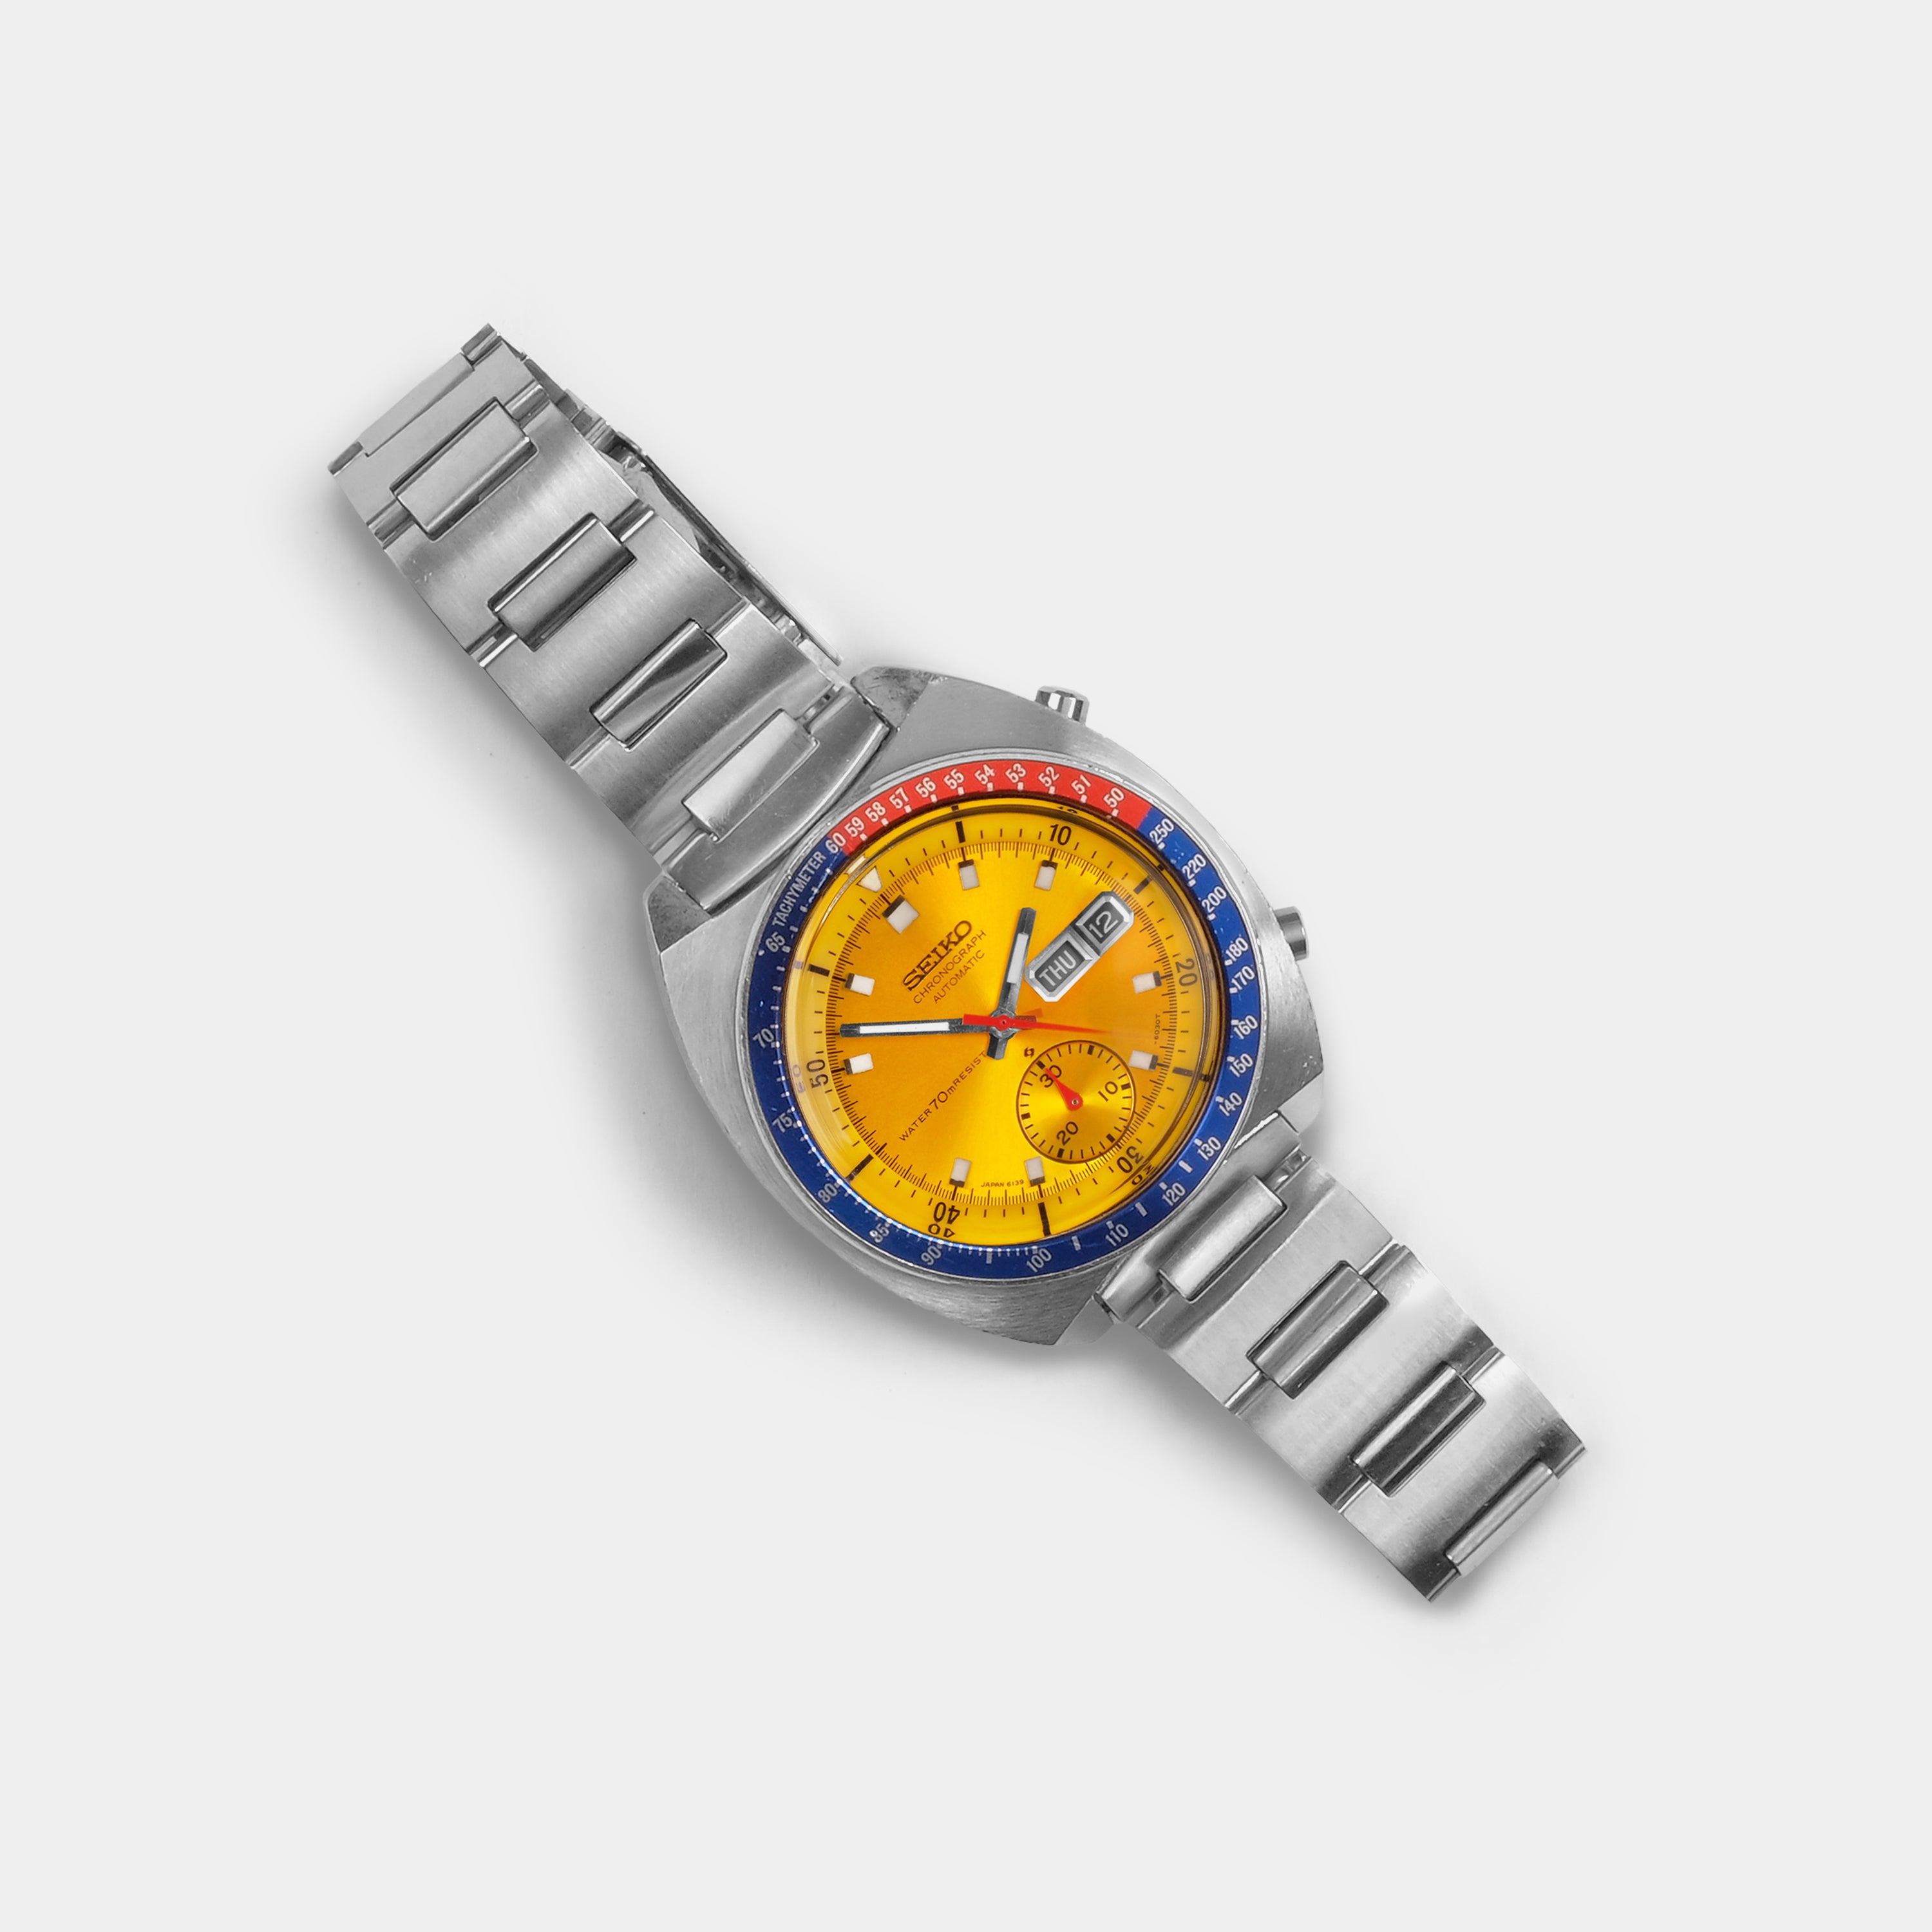 Seiko "Pogue" Automatic Chronograph ref. 6139-6002 (Yellow Dial) Circa July 1971 Wristwatch